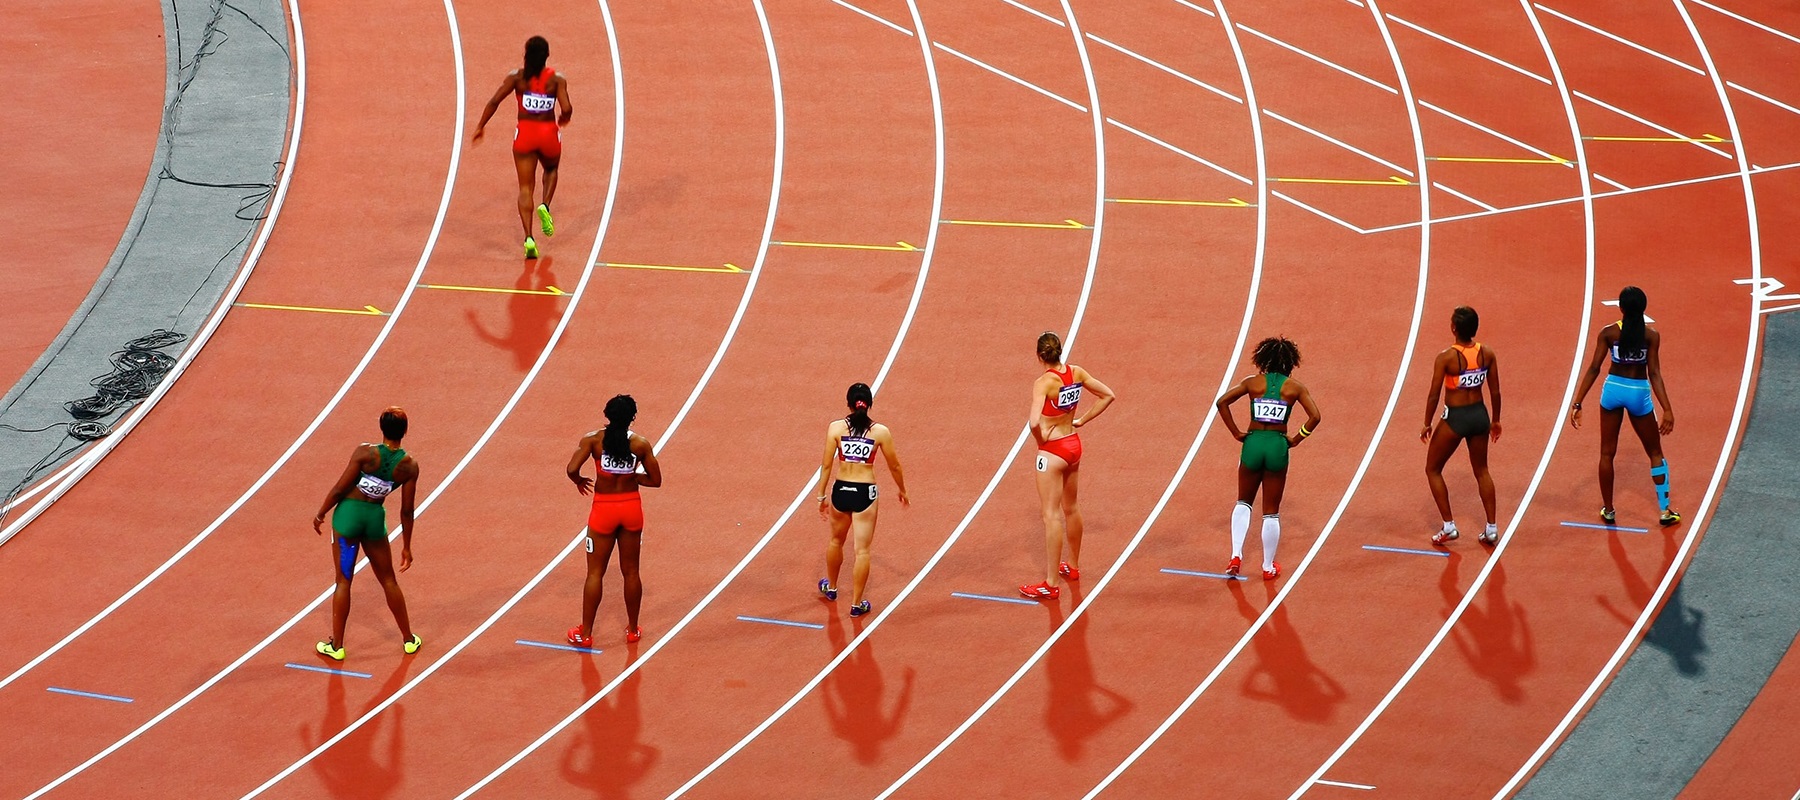 Female athletes on running track waiting to start race